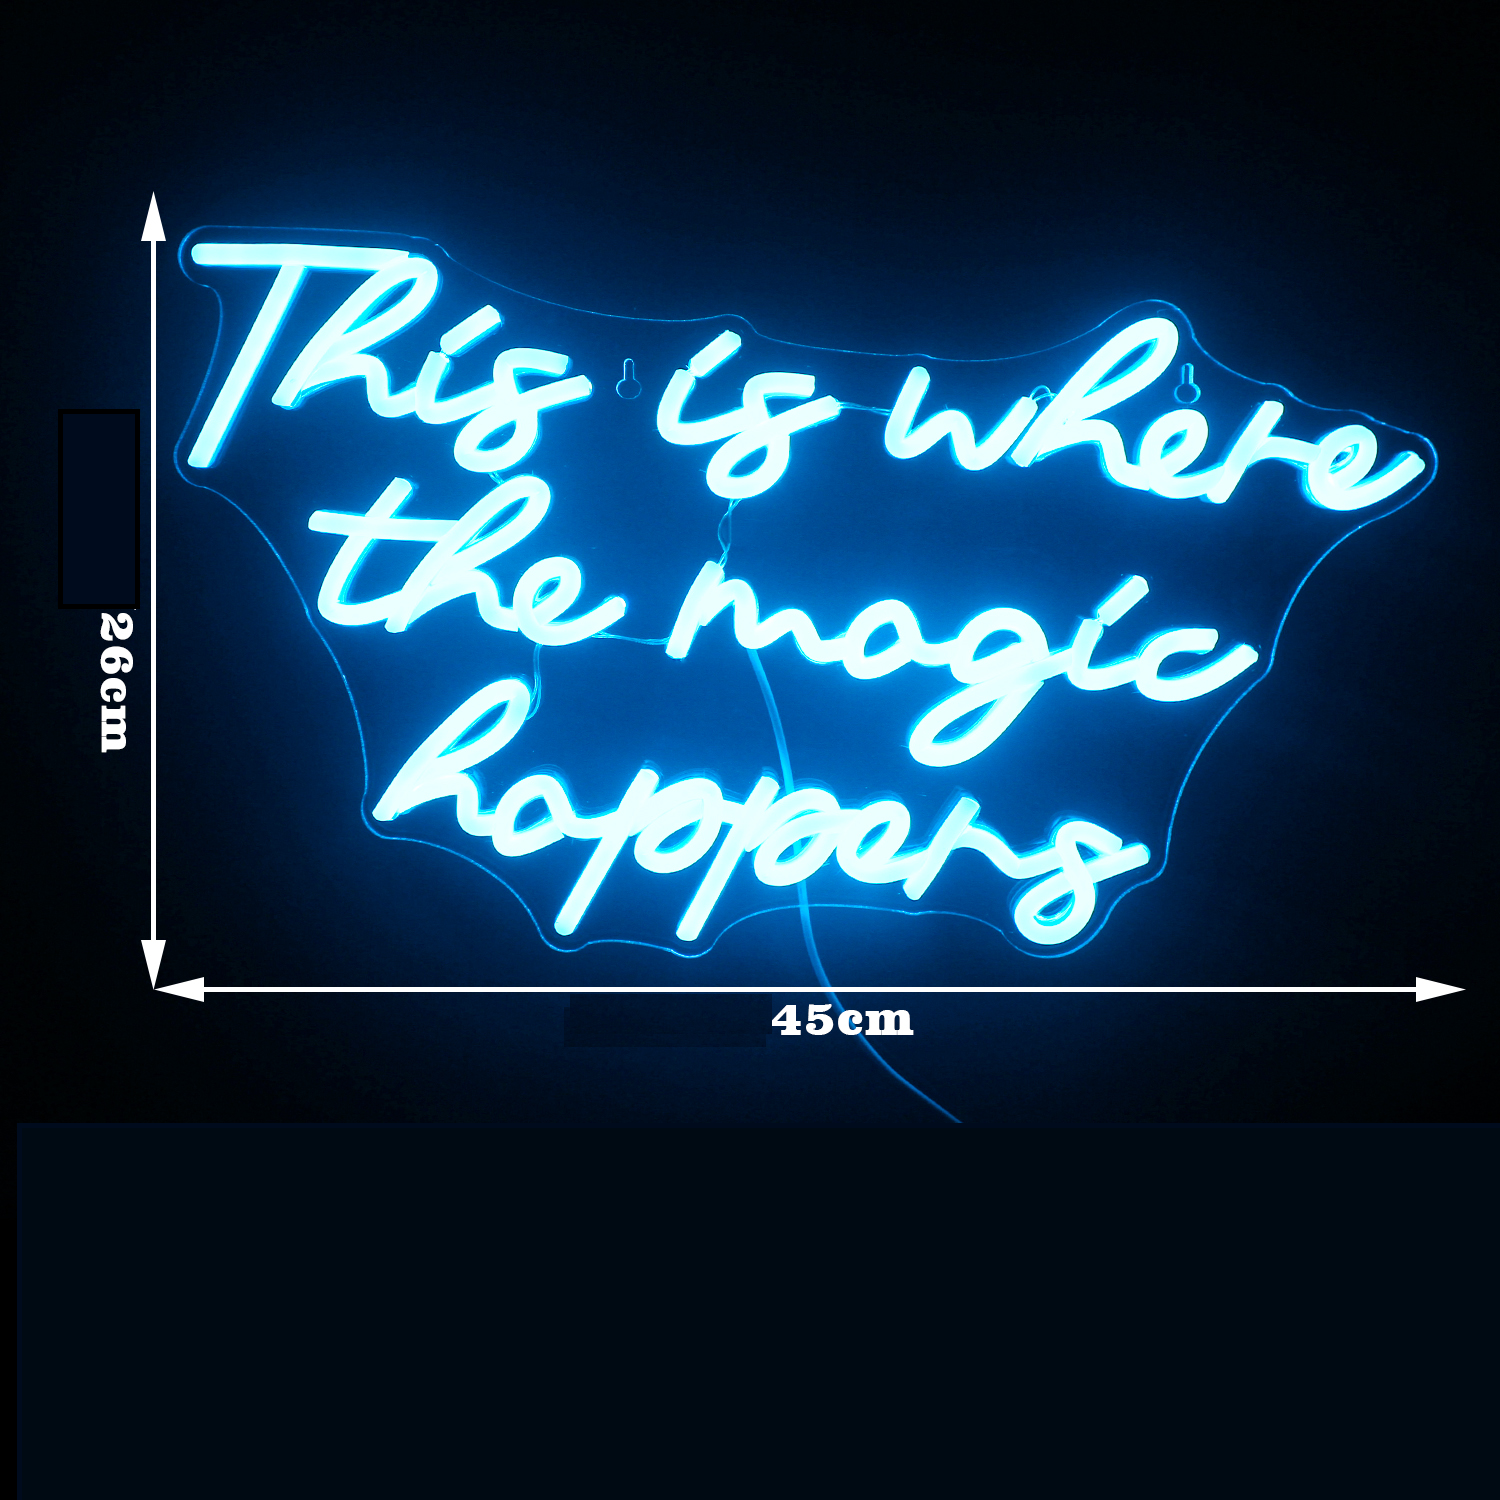 Neon This Where The Magic Happens - 45cmx30cm